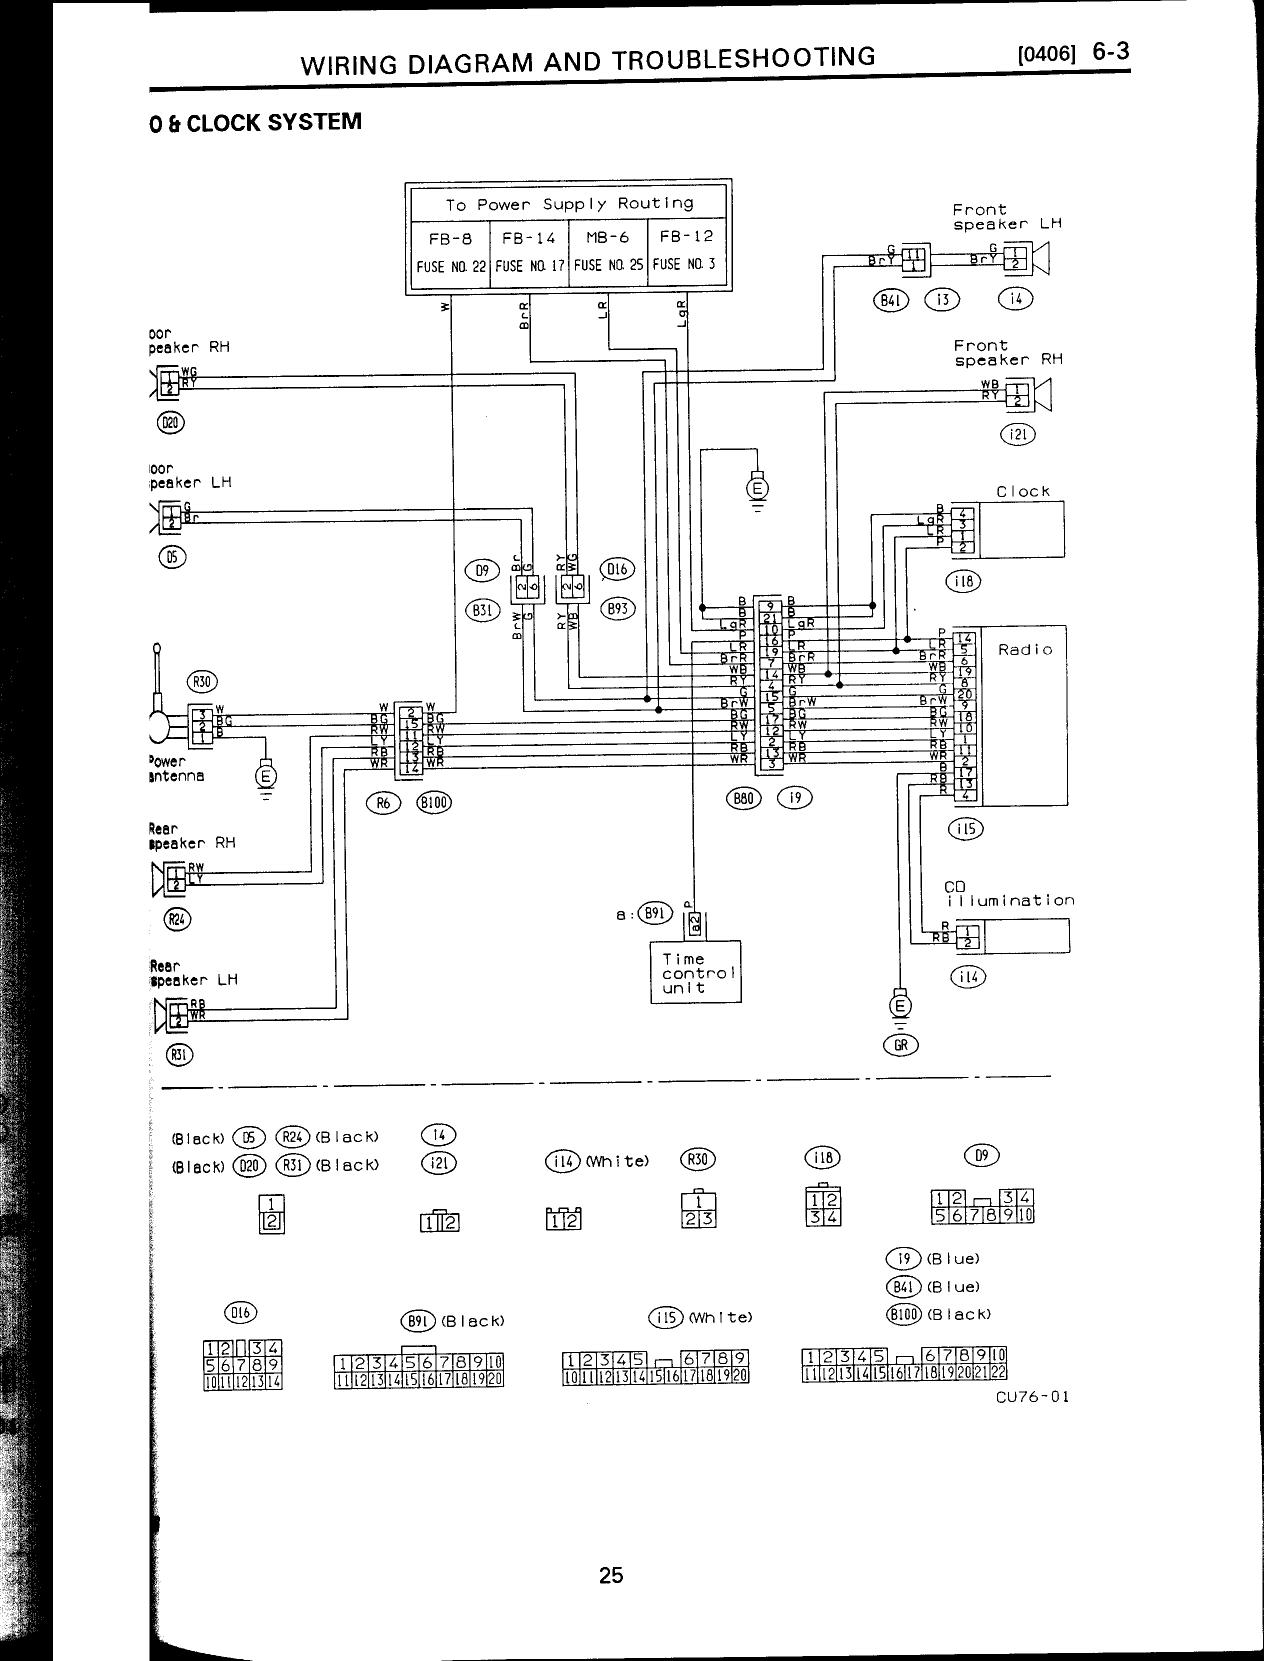 SUBARU - Car PDF Manual, Wiring Diagram & Fault Codes DTC  2006 Subaru Forester Wiring Diagrams    automotive-manuals.net